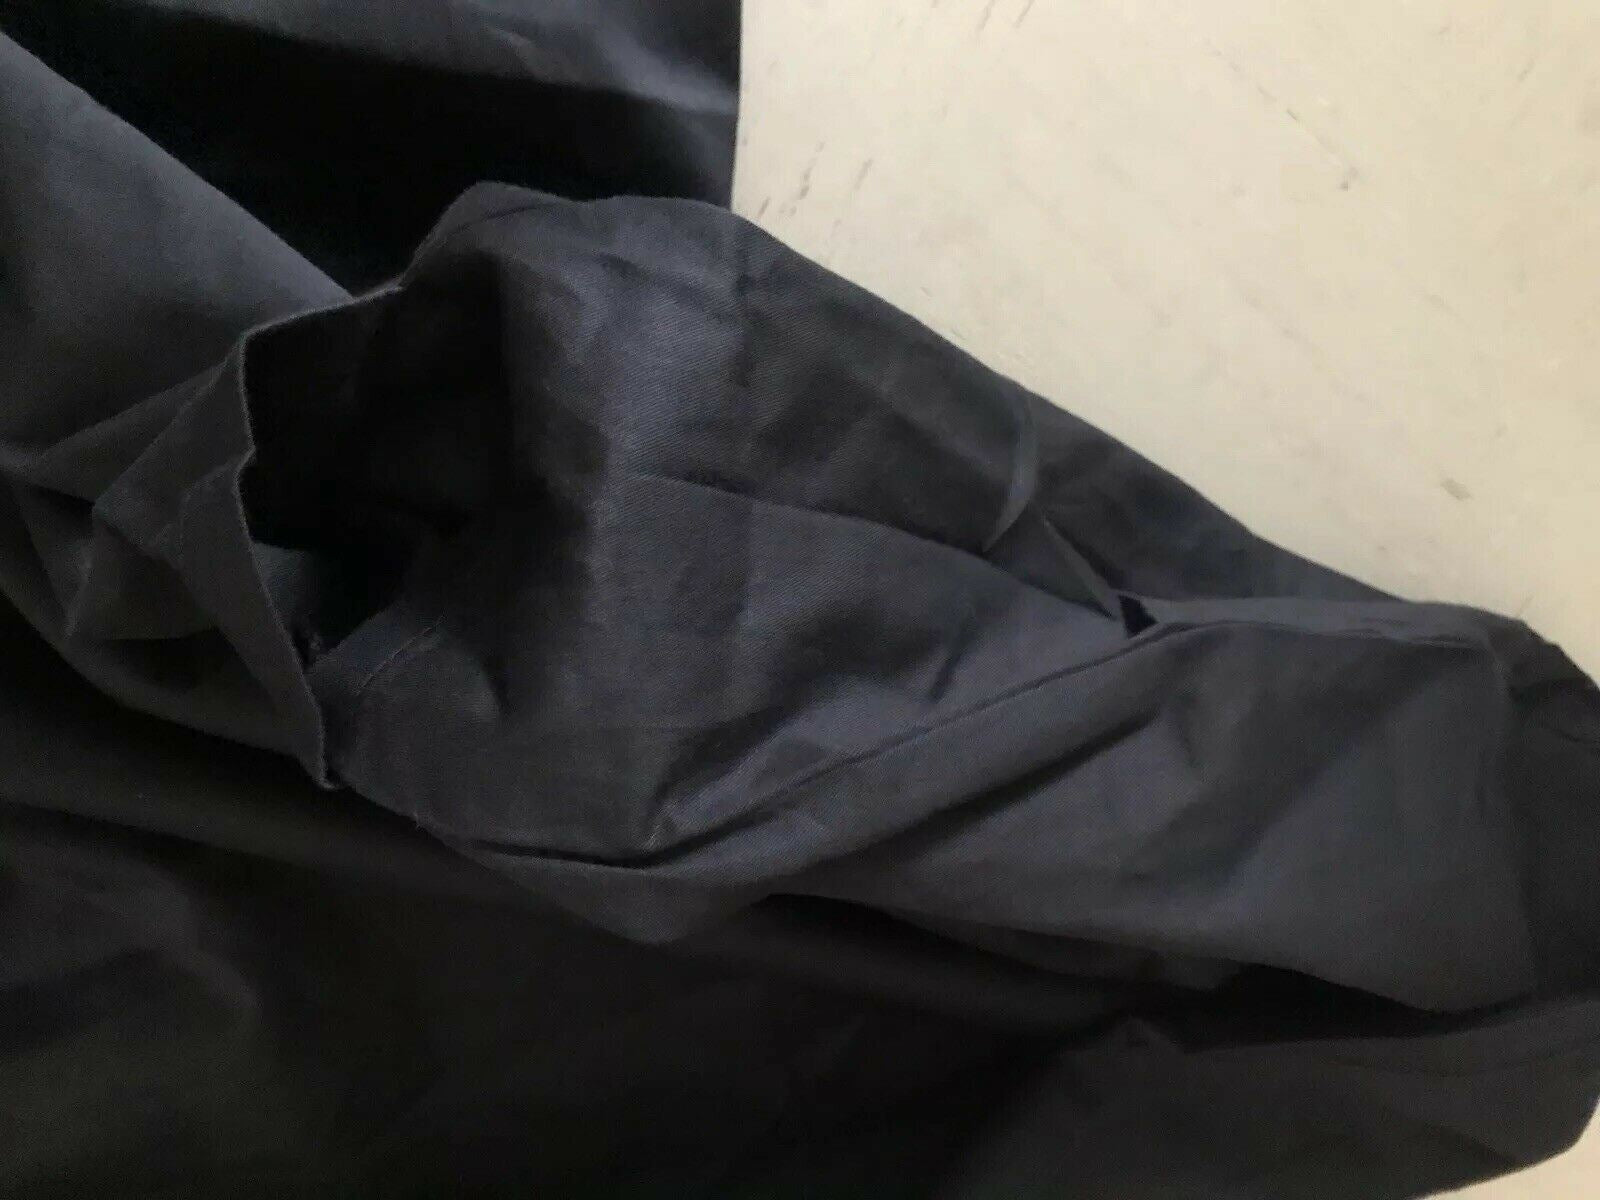 Brand New Gucci Garment Overcoat Dress Any Clothing Black Long Bag